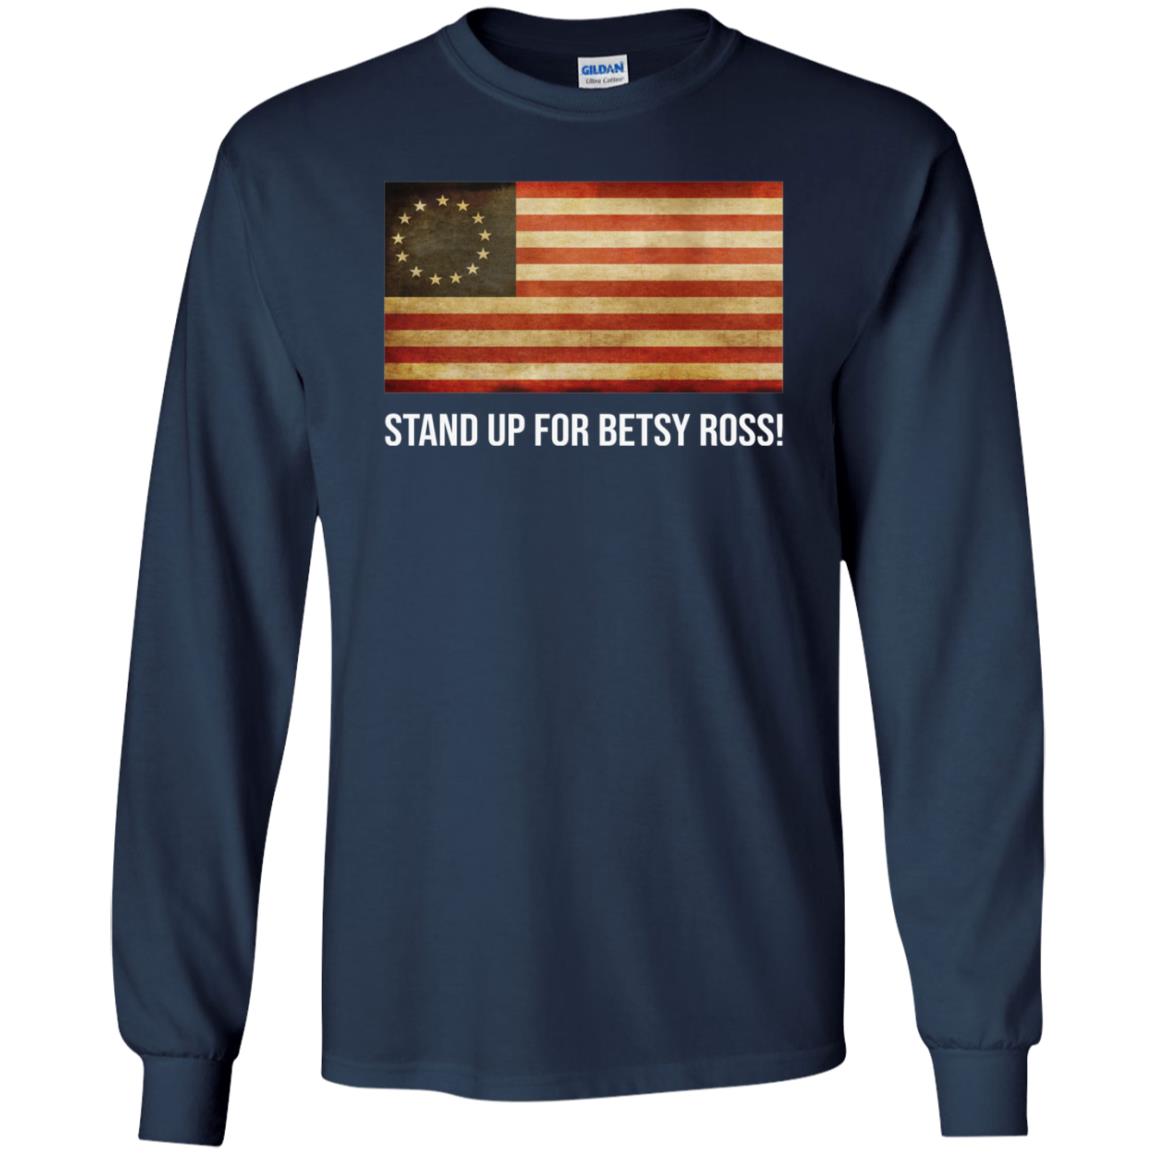 Rush Limbaugh Betsy Ross Flag Shirt, Sweatshirt1155 x 1155